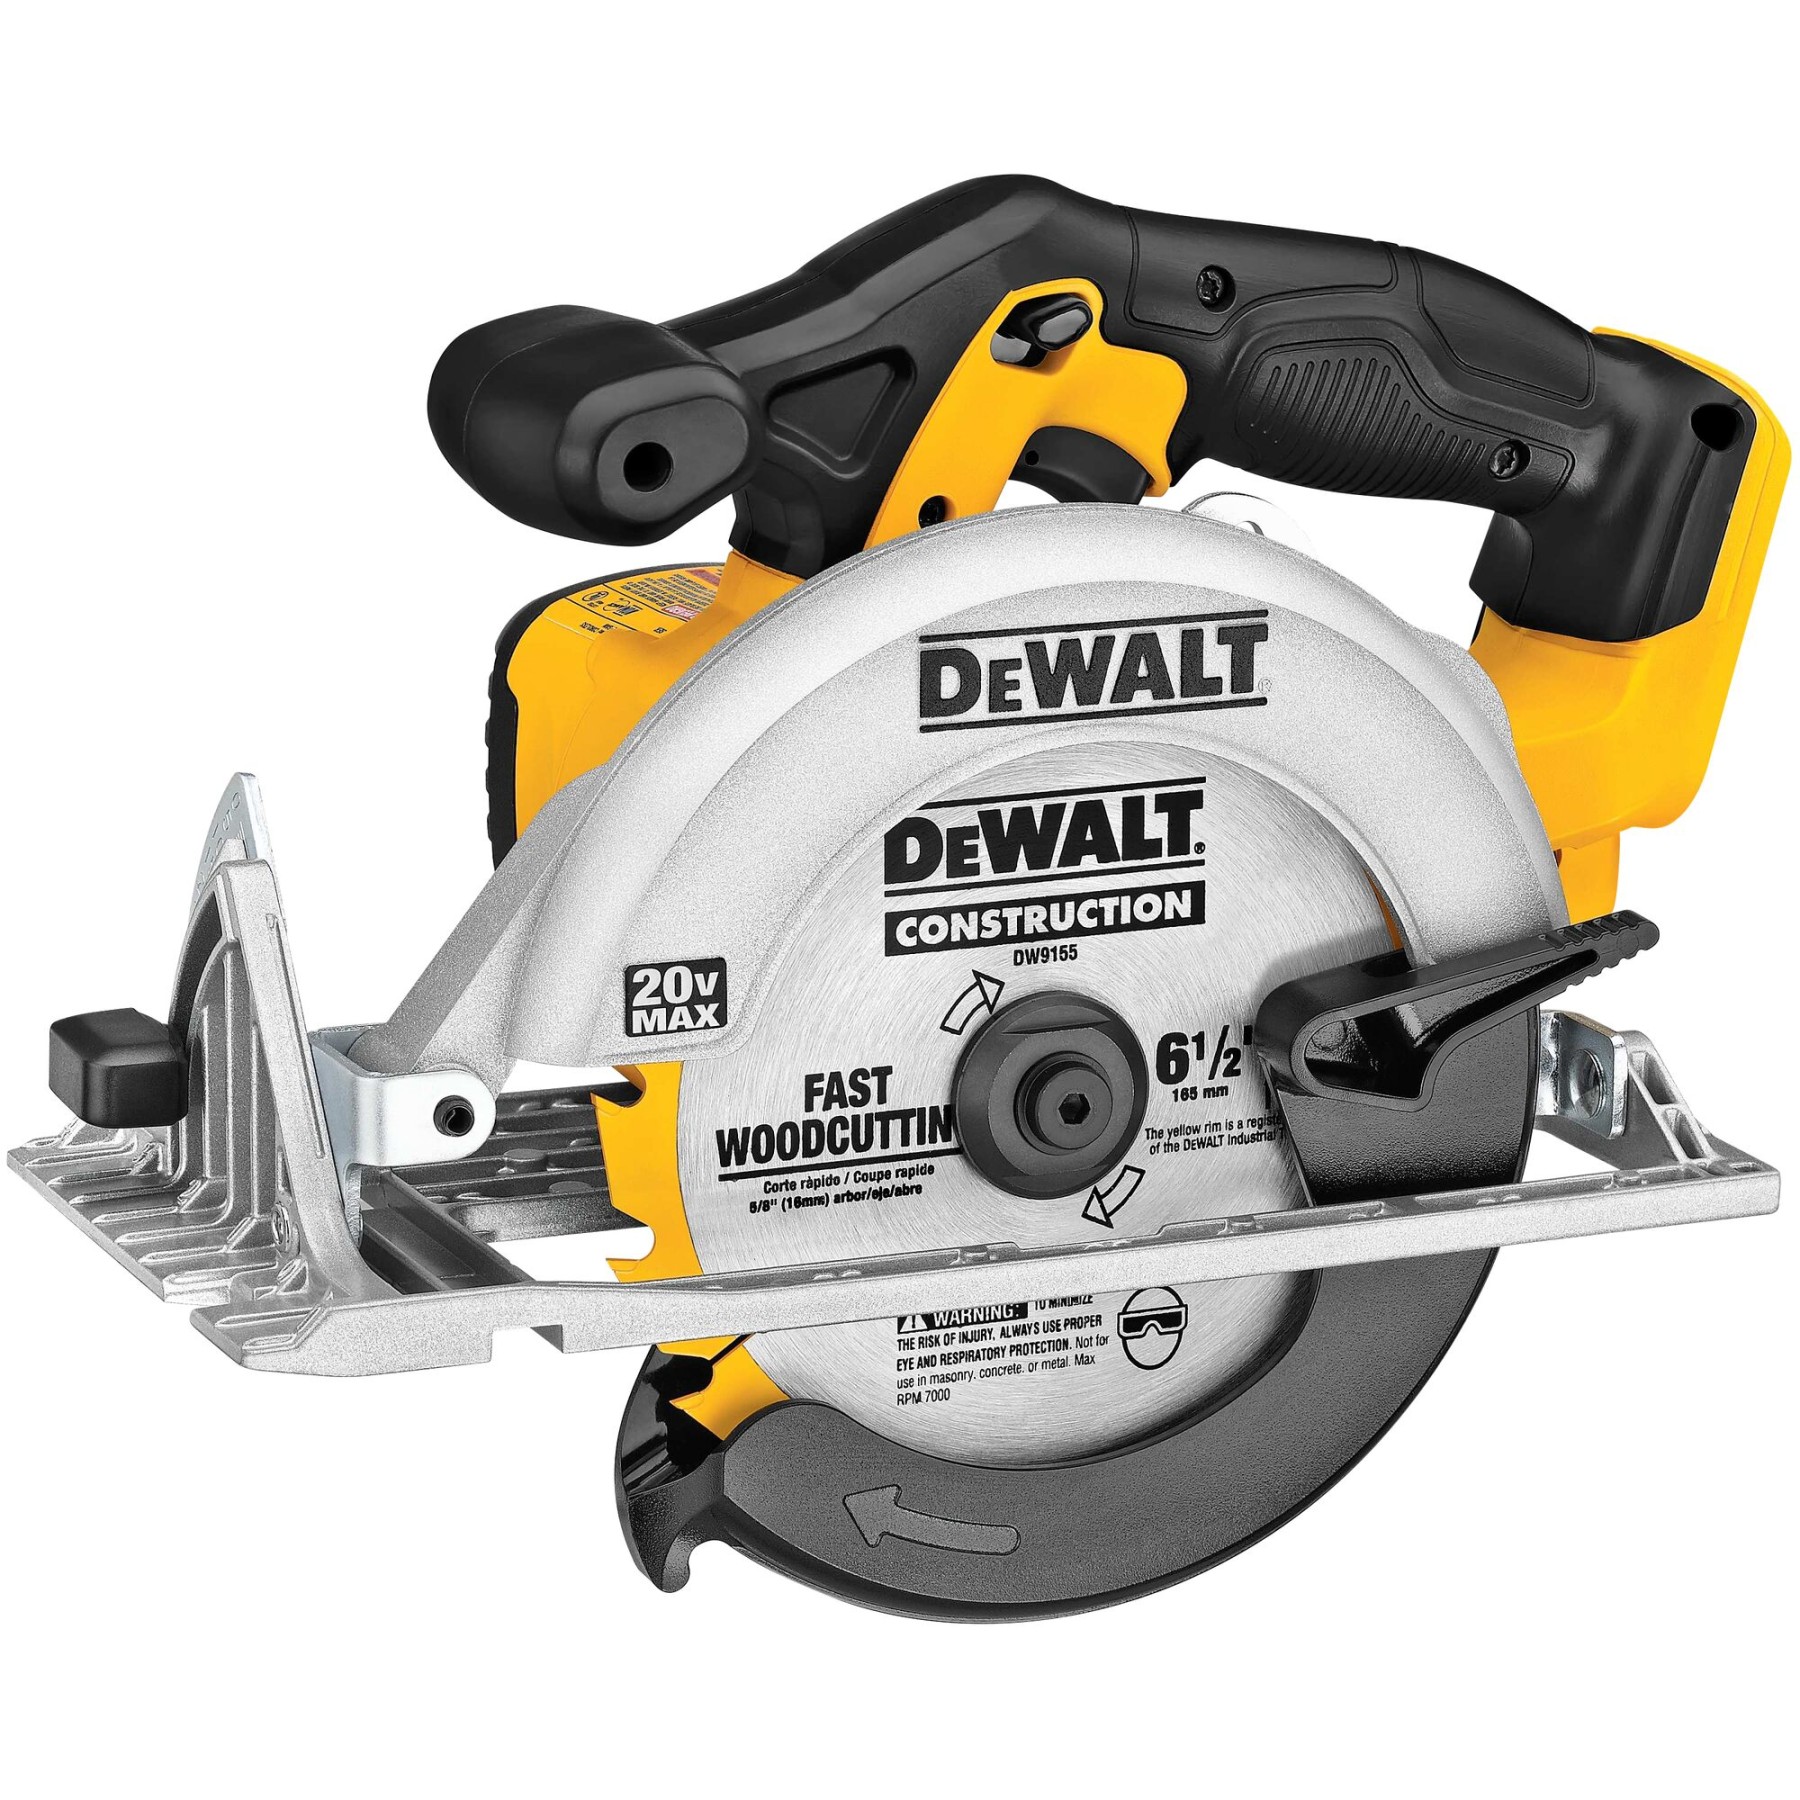 DEWALT -volt Max -/-in Cordless Circular Saw (Bare Tool) in